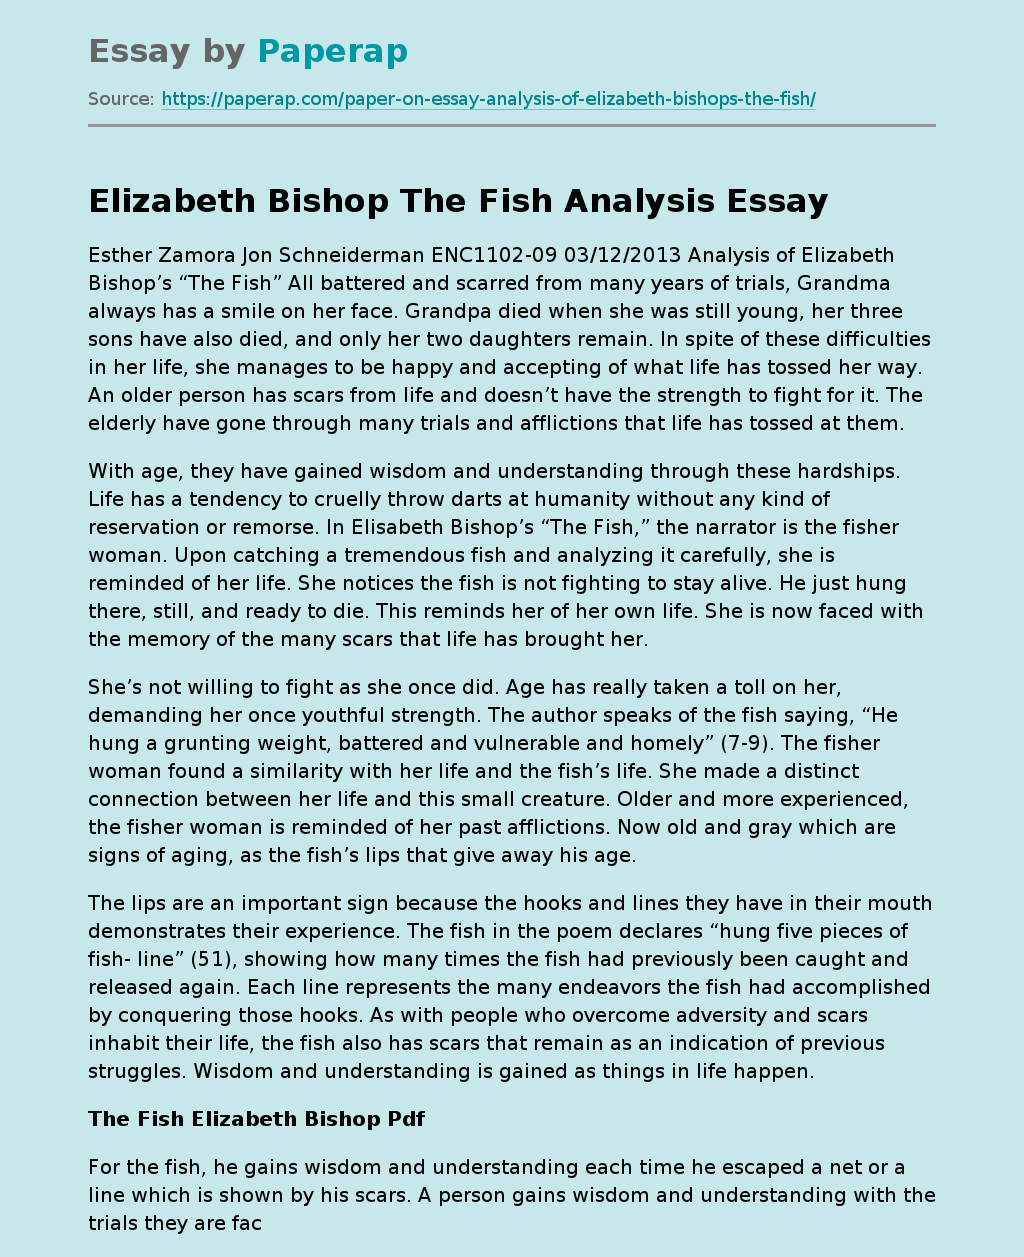 Elizabeth Bishop The Fish Analysis